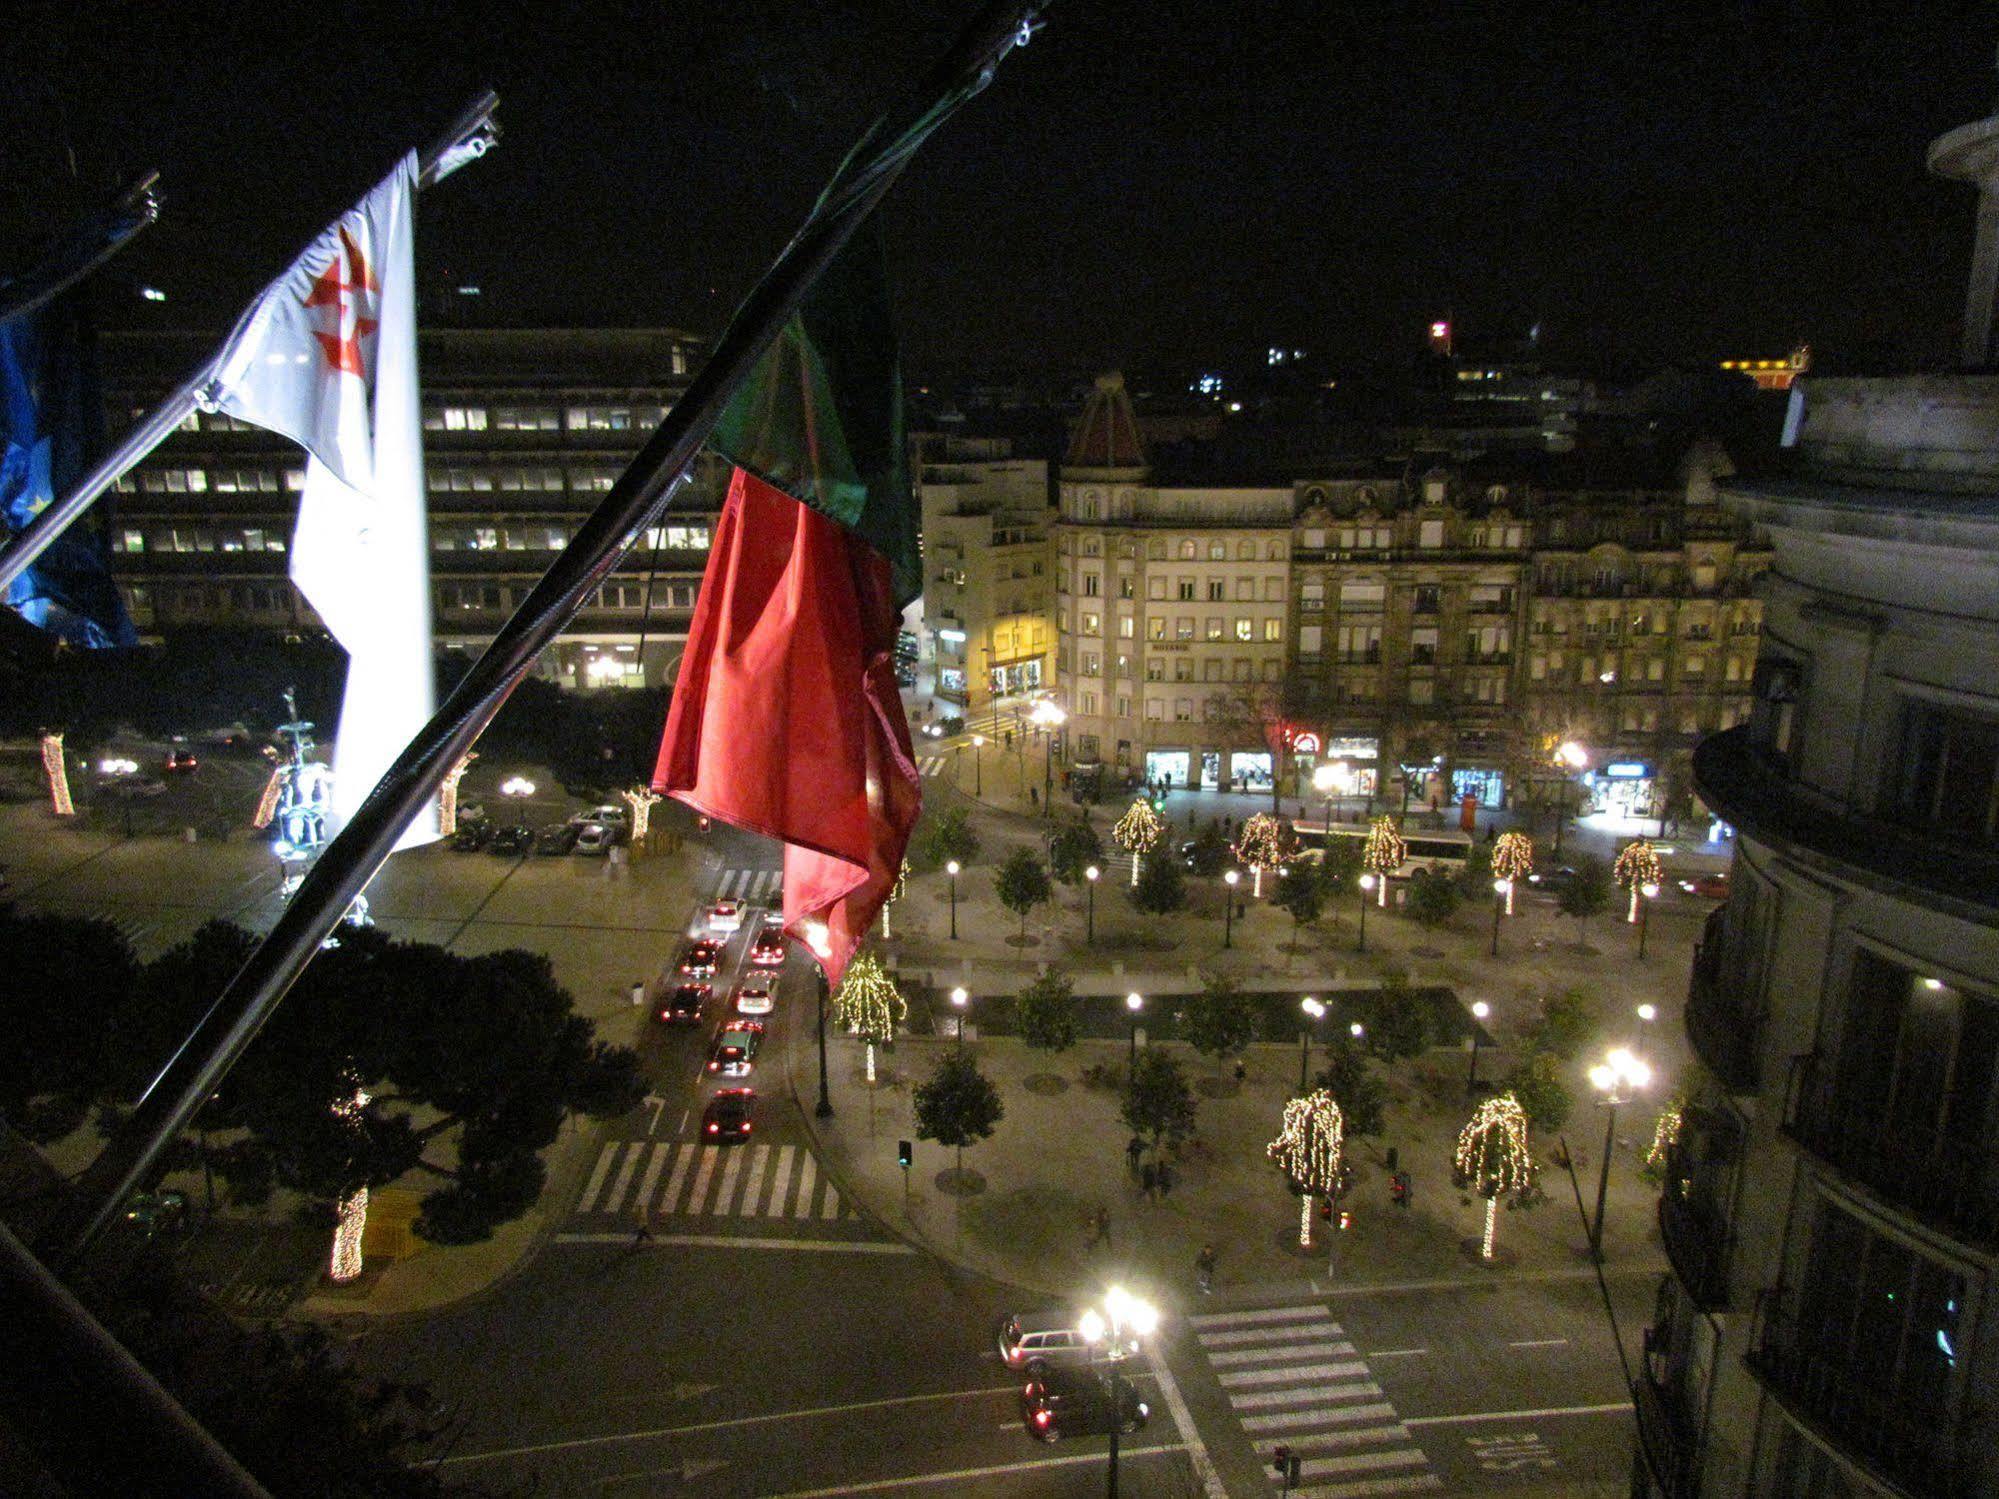 Vera Cruz Porto Downtown Hotel Exterior photo